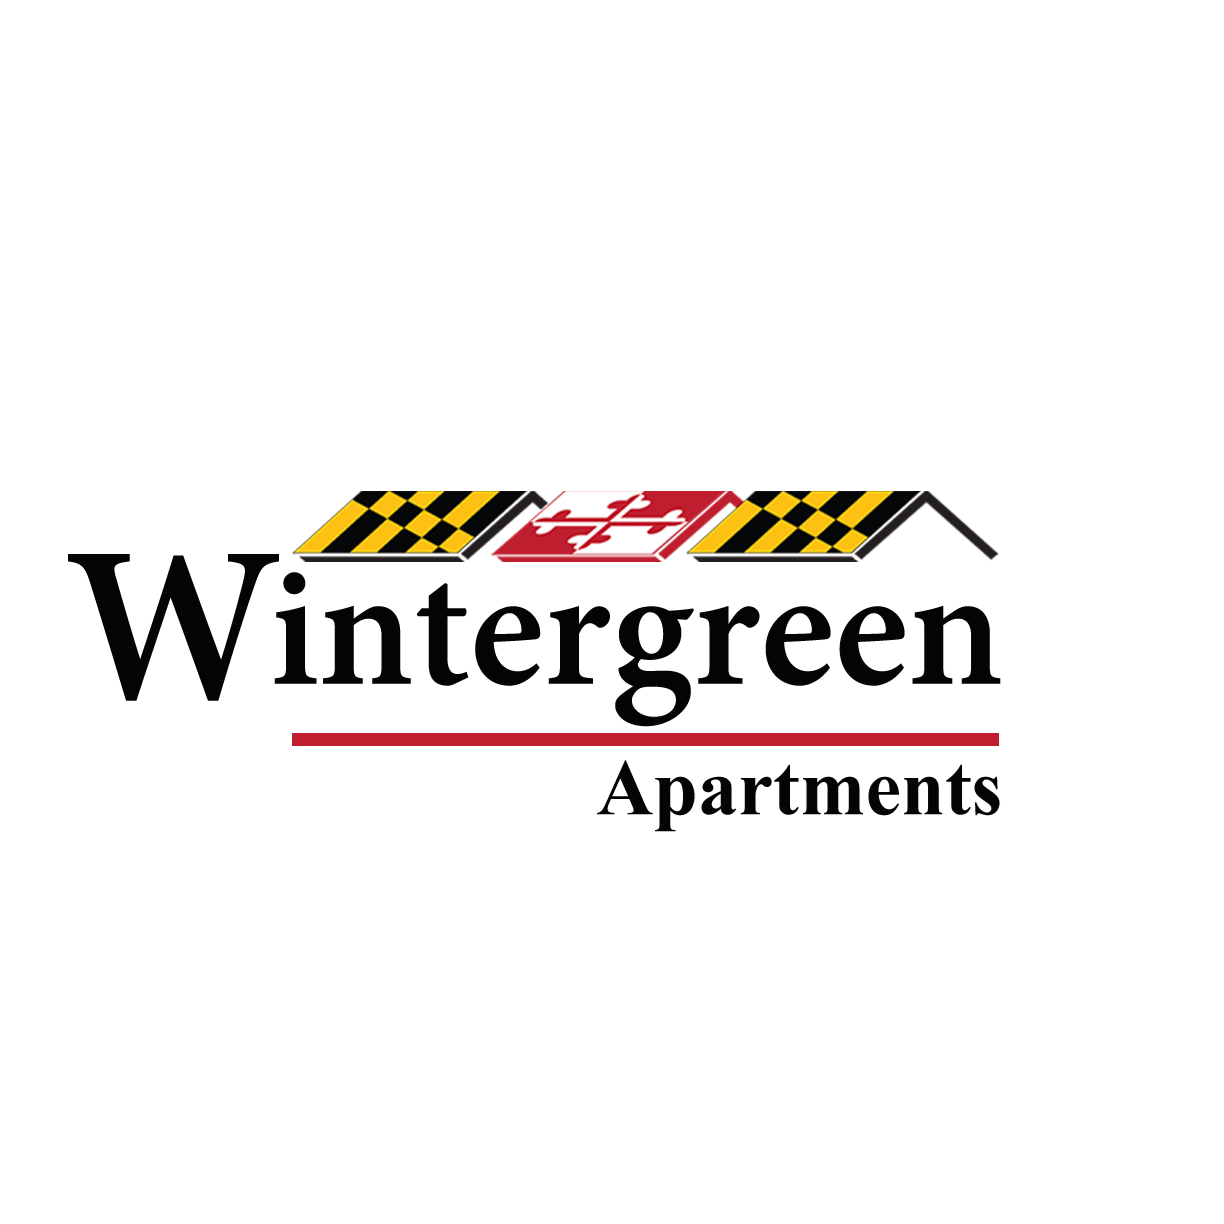 Wintergreen Apartments - Cockeysville, MD 21030 - (410)628-1231 | ShowMeLocal.com